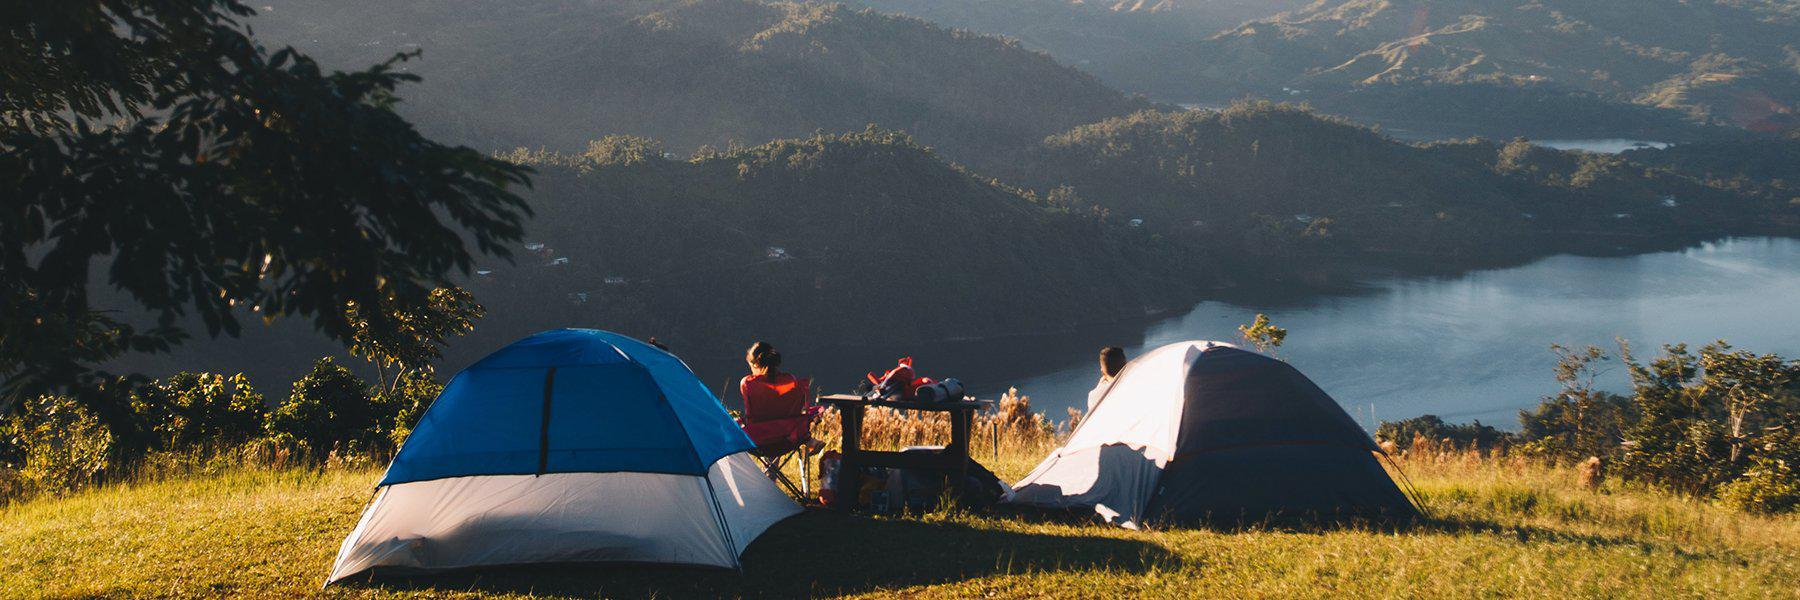 5 fun camping activities for your next outdoor adventure!